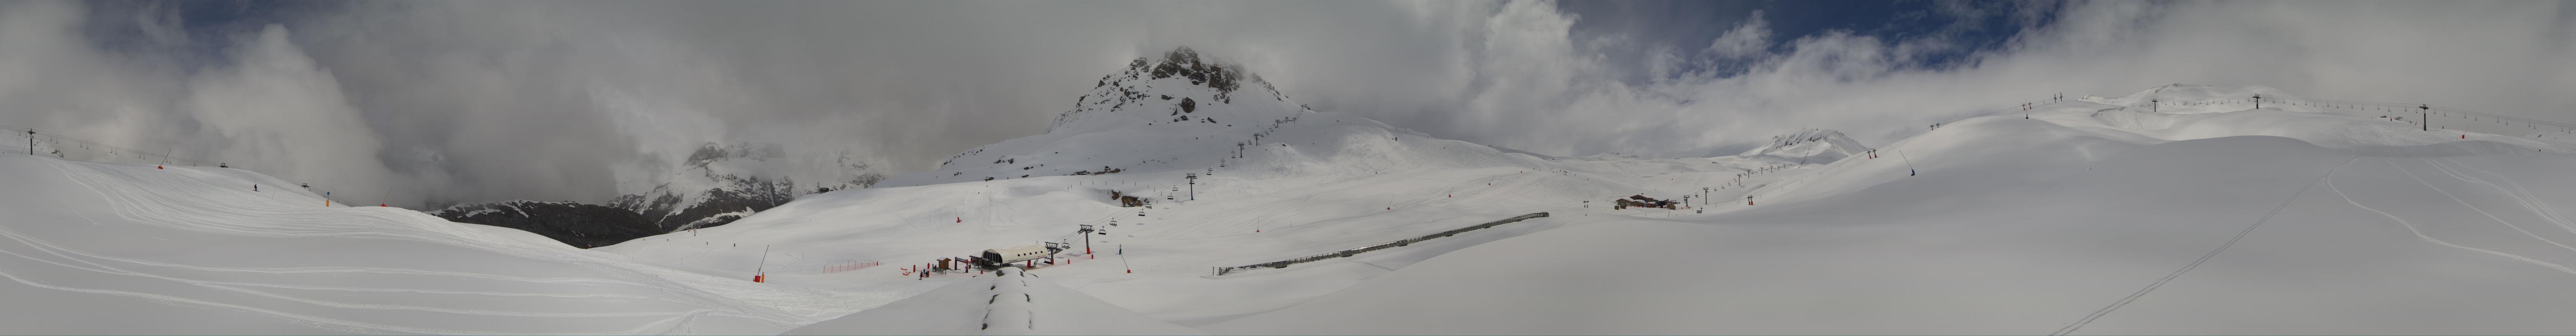 Val d'Isere webcam - snowpark